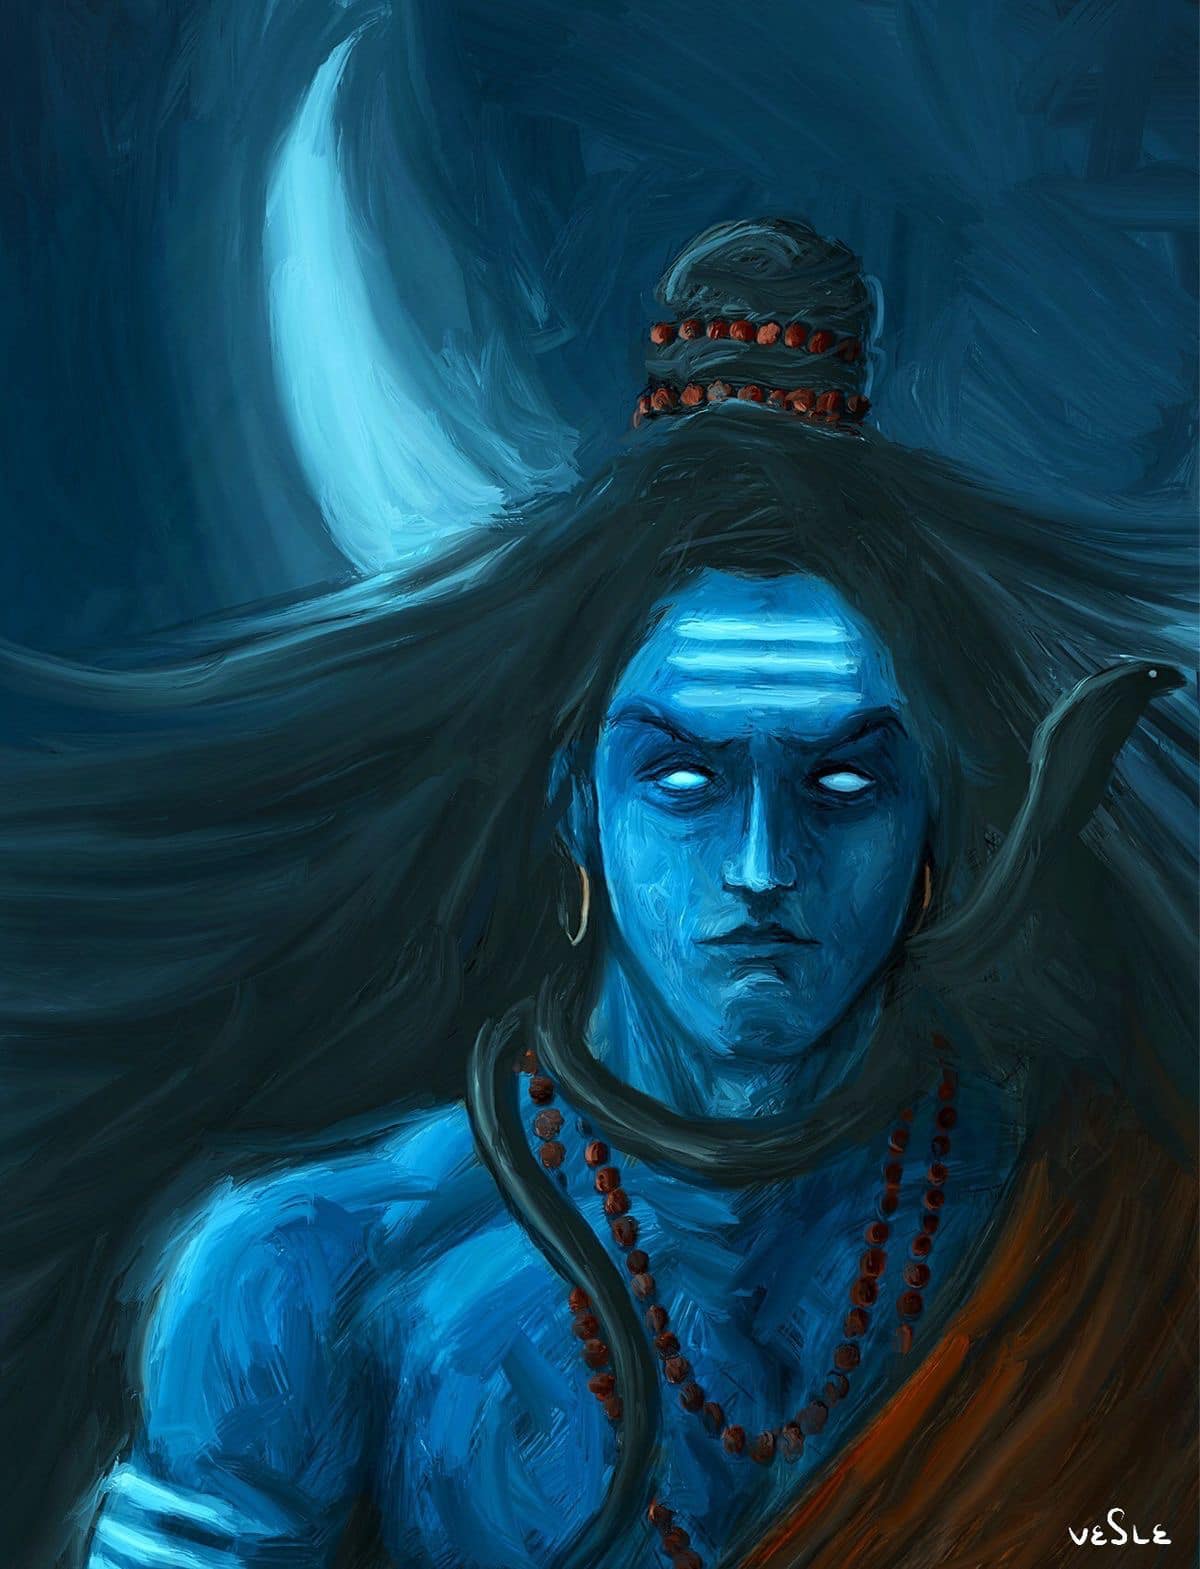 Lord Shiva-Bholenath-4-Vijendra Singh Vesle-Stumbit Lord Shiva